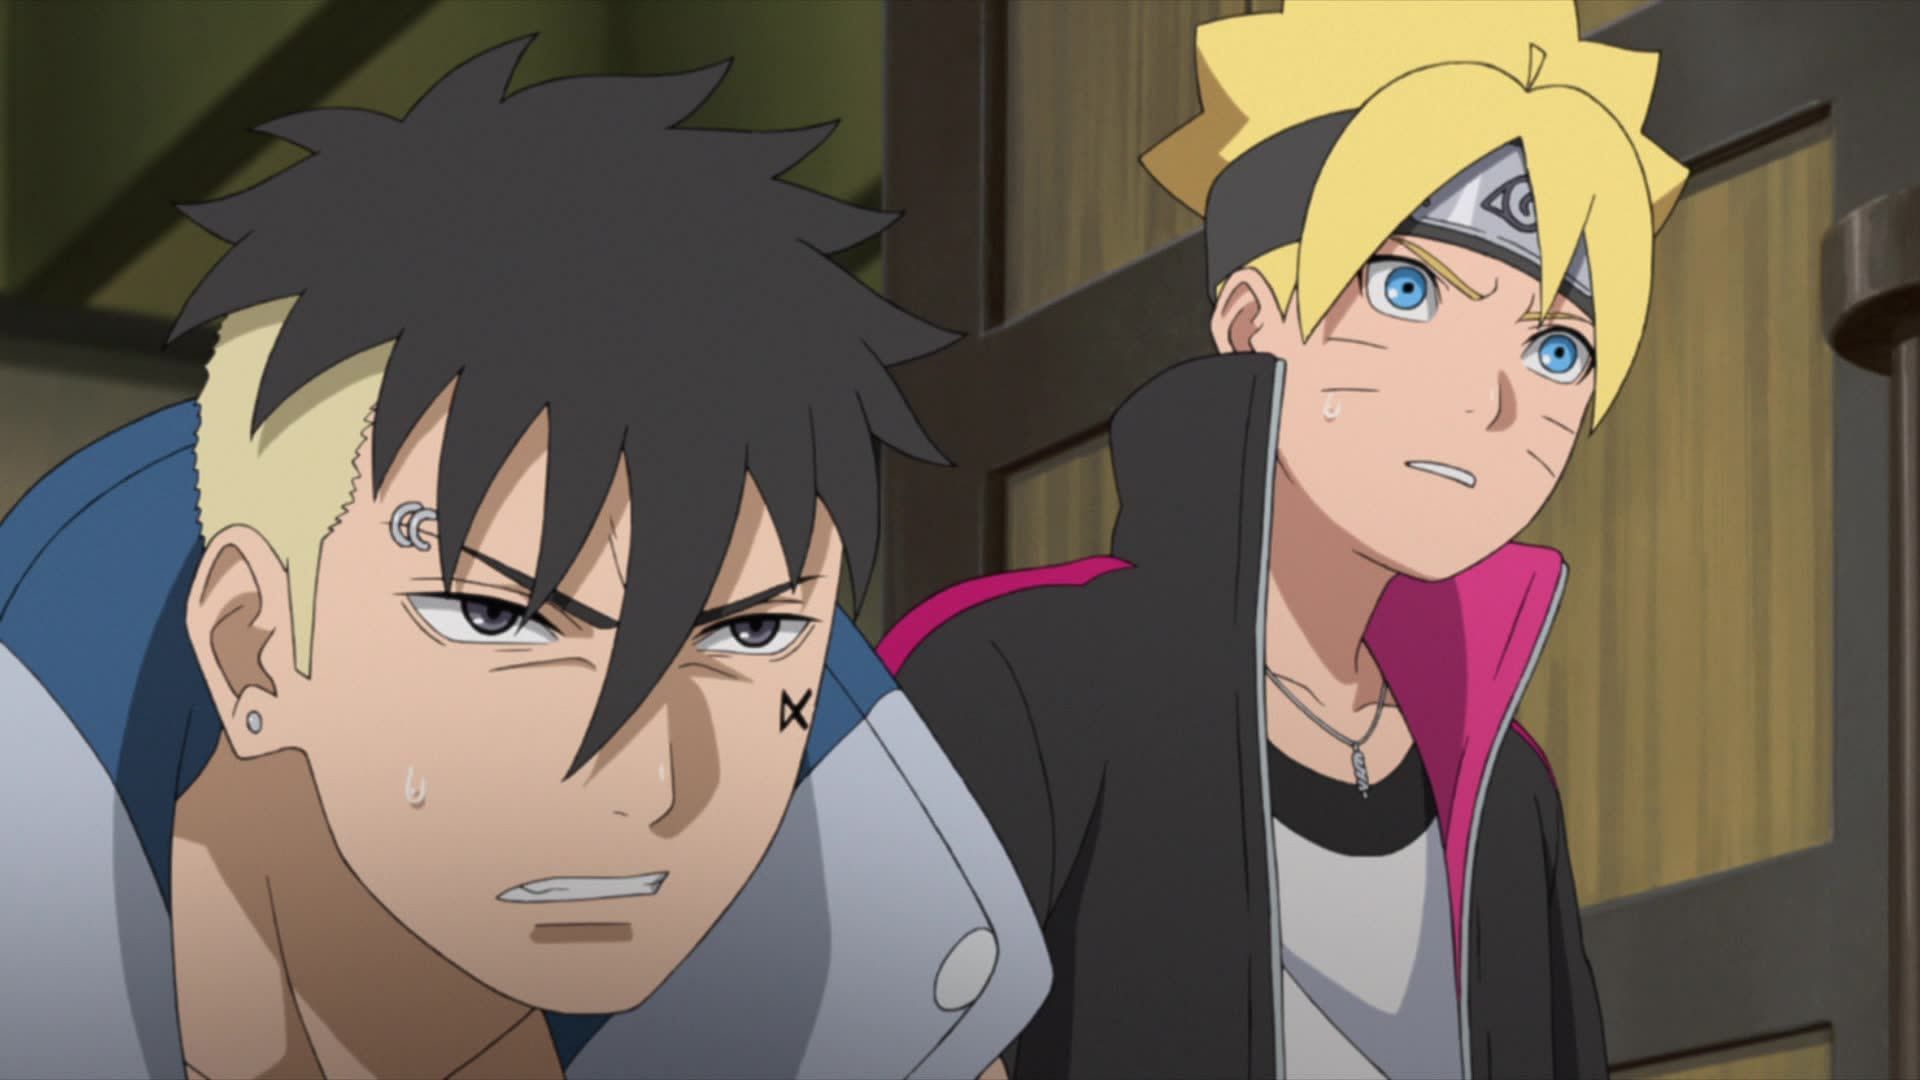 A clash between brothers may occur during Boruto episode 255 (Image credit: Masashi Kishimoto/Shueisha, Viz Media, Boruto: Naruto Next Generations)